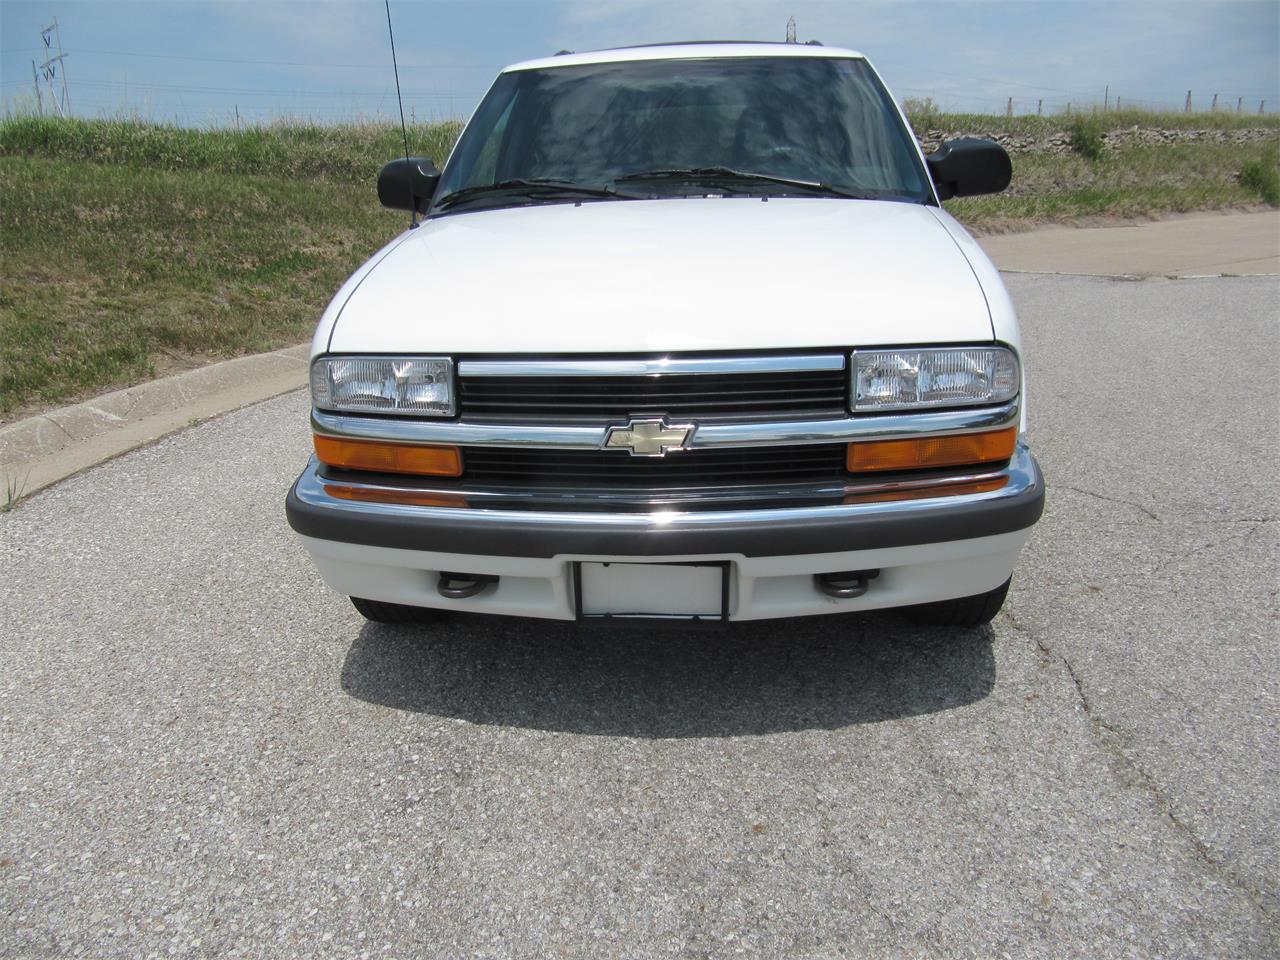 Chevrolet Blazer 2000, factory-issued press photo, IAA, 9/1999